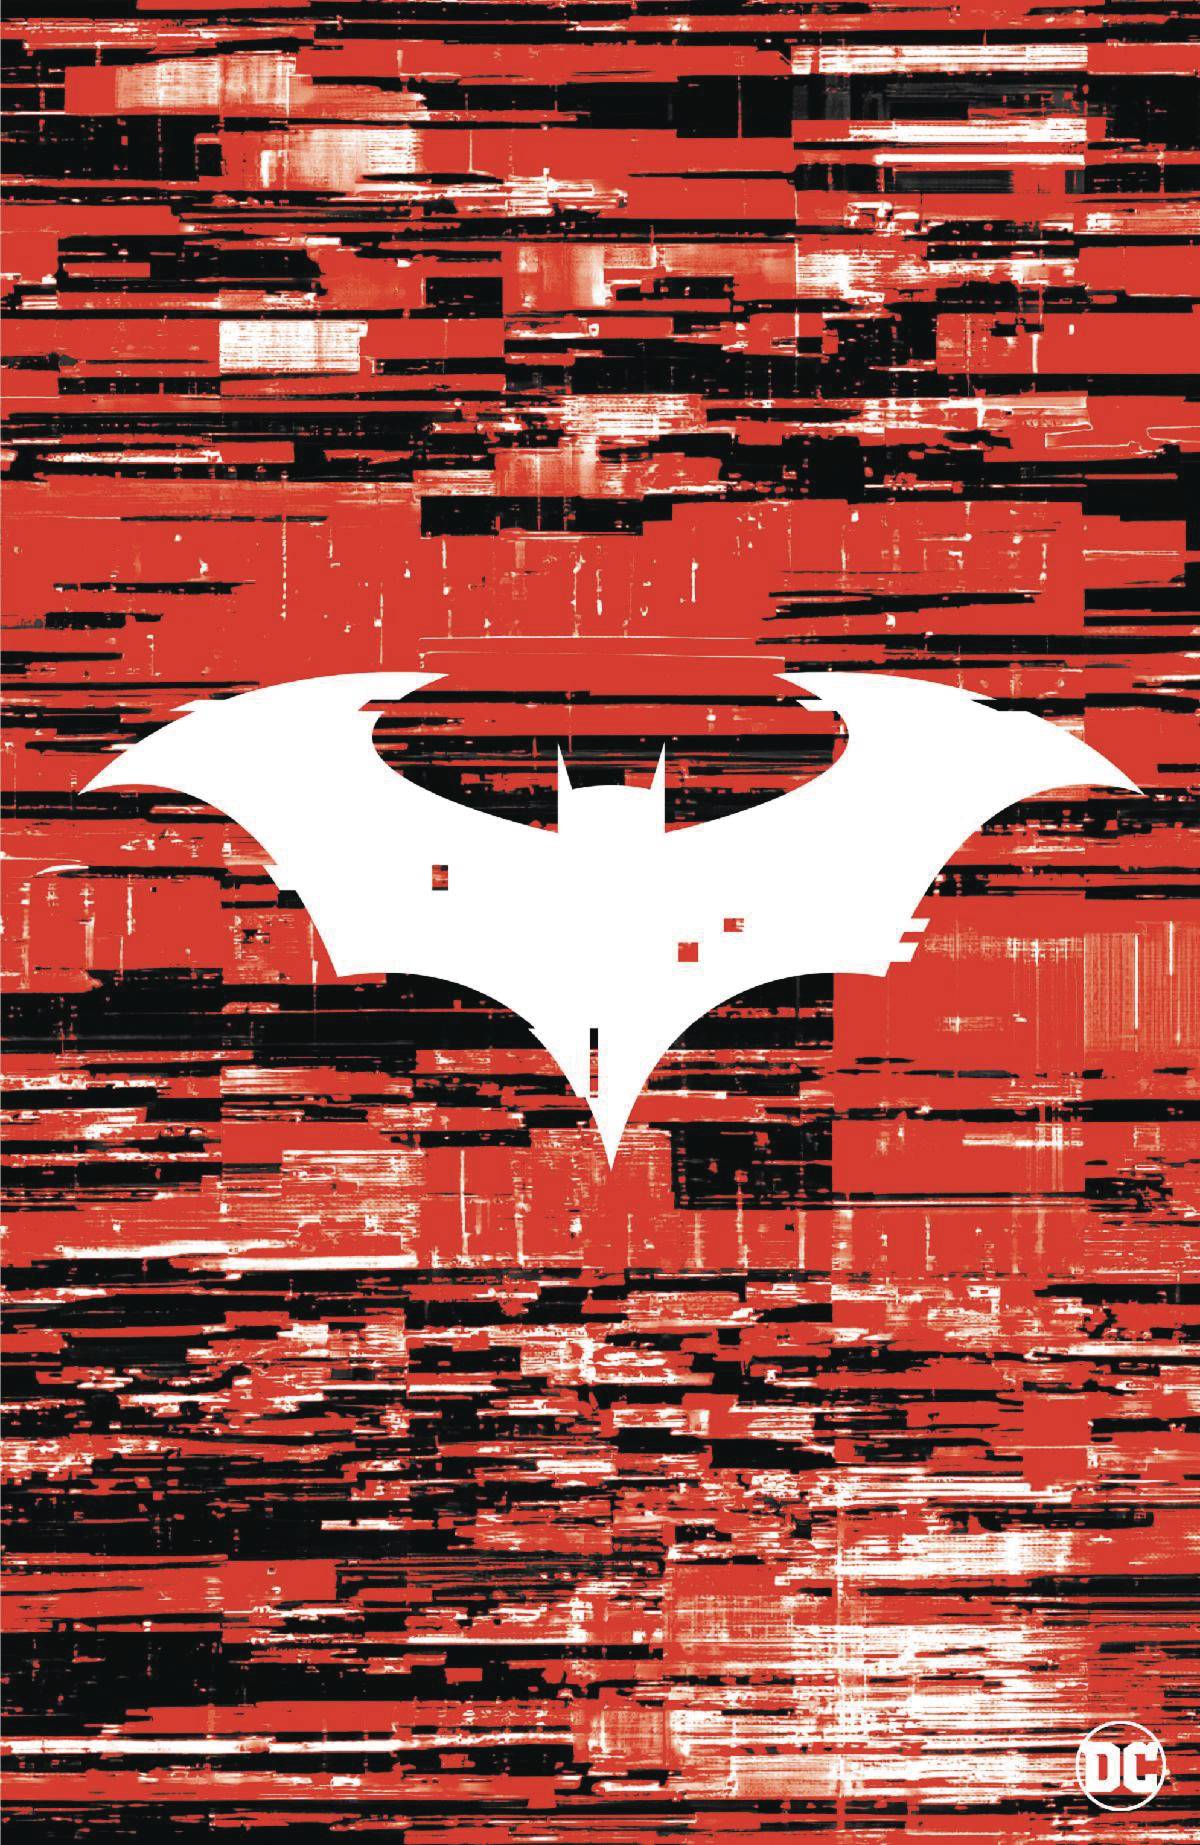 BATMAN #139 | SELECT VARIANT COVERS | 2023